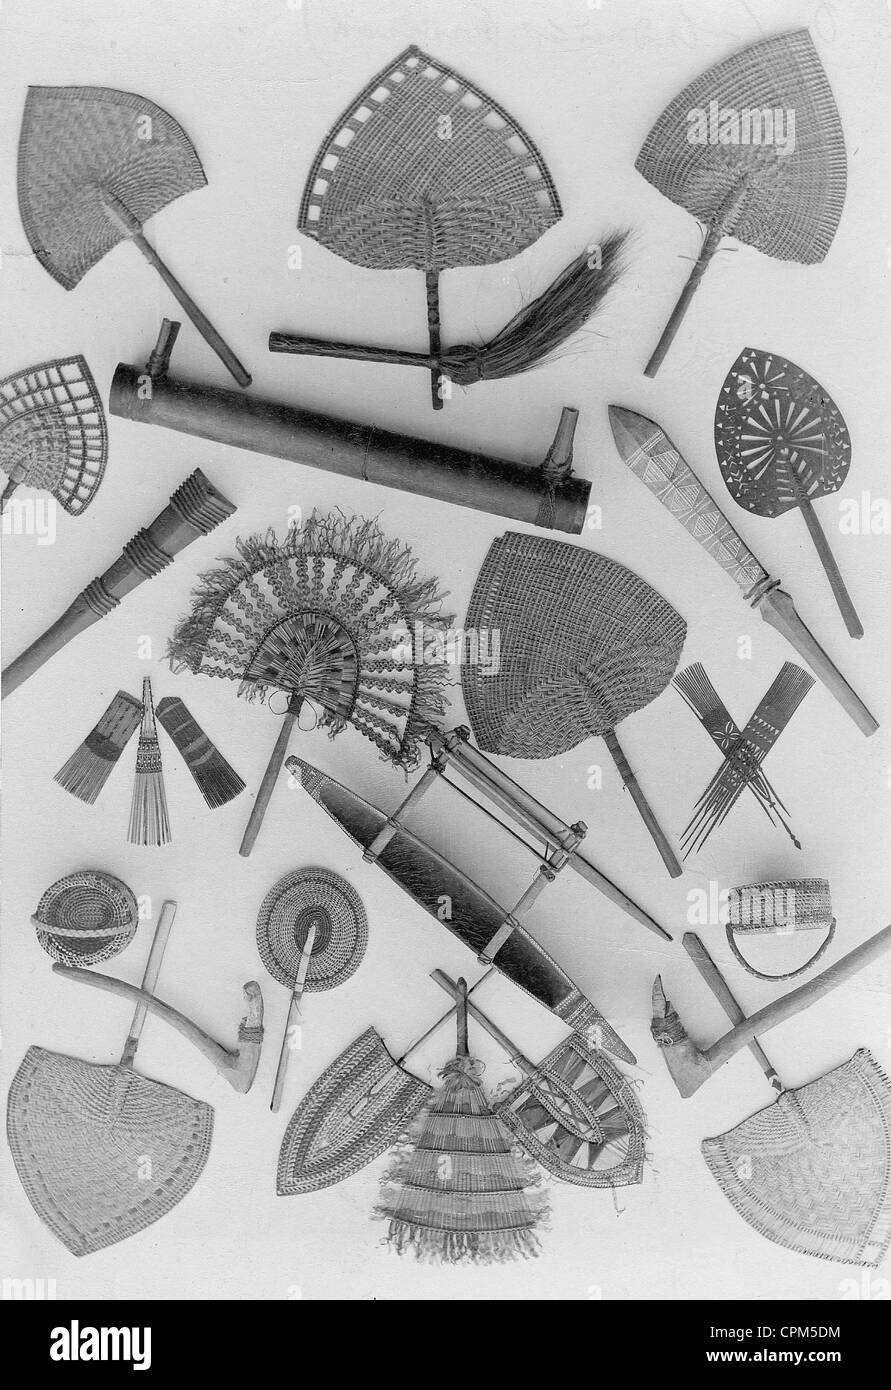 Equipment from inhabitants of the German colony of Samoa, 1903 Stock Photo